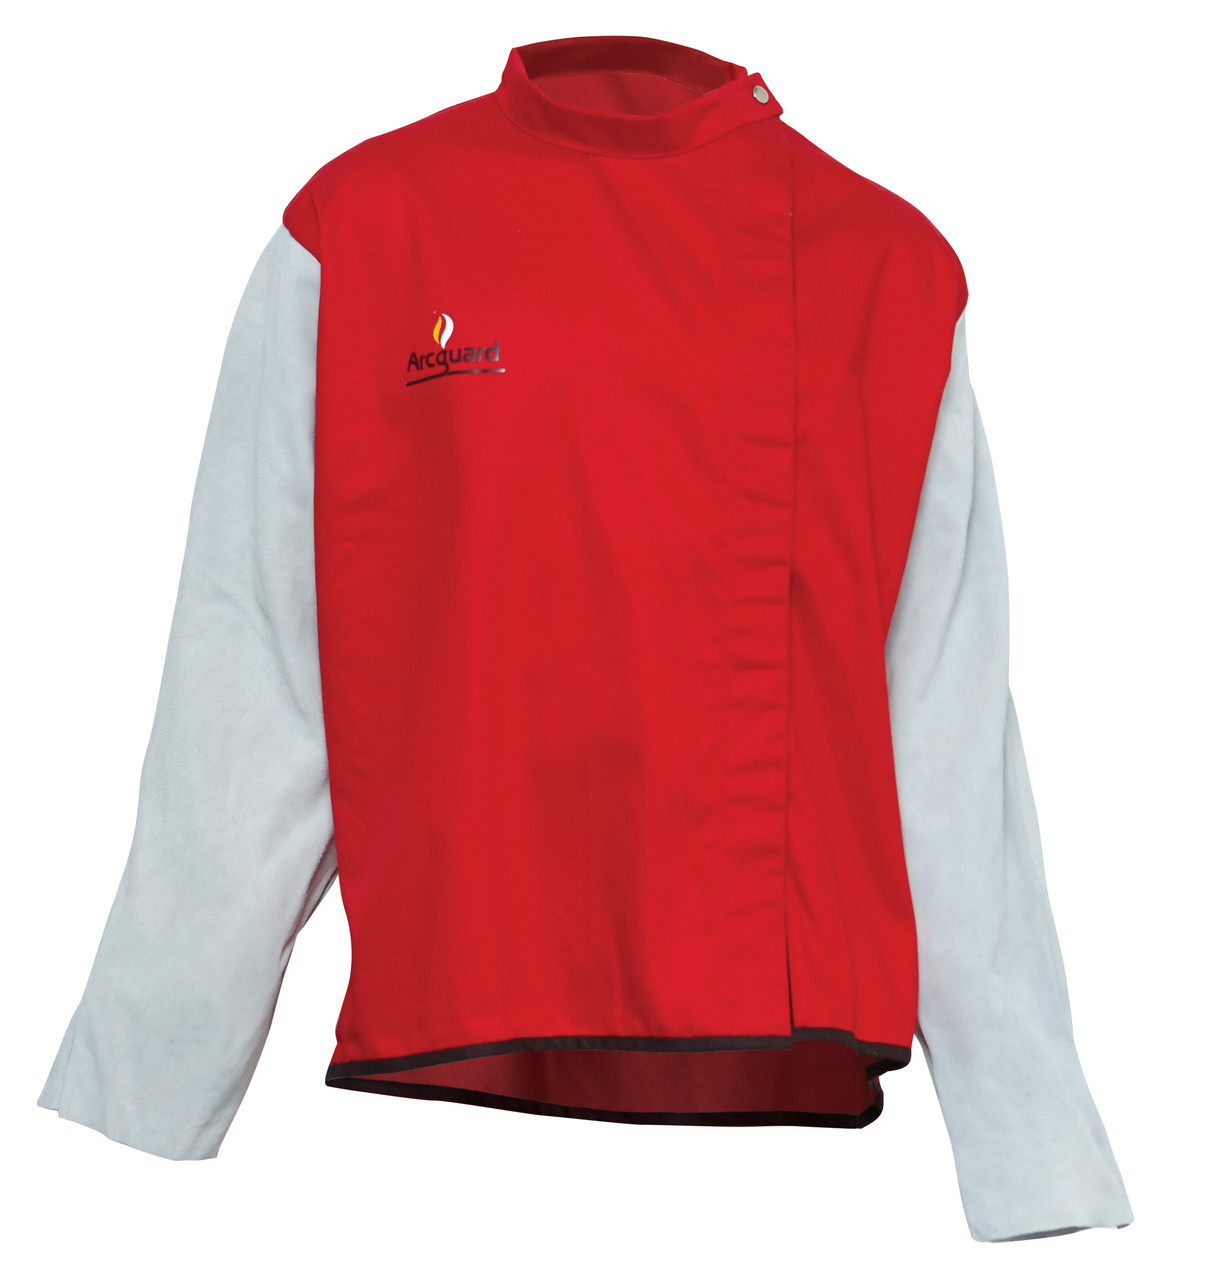 Arcguard Welding Jacket With Leather Sleeves - Medium